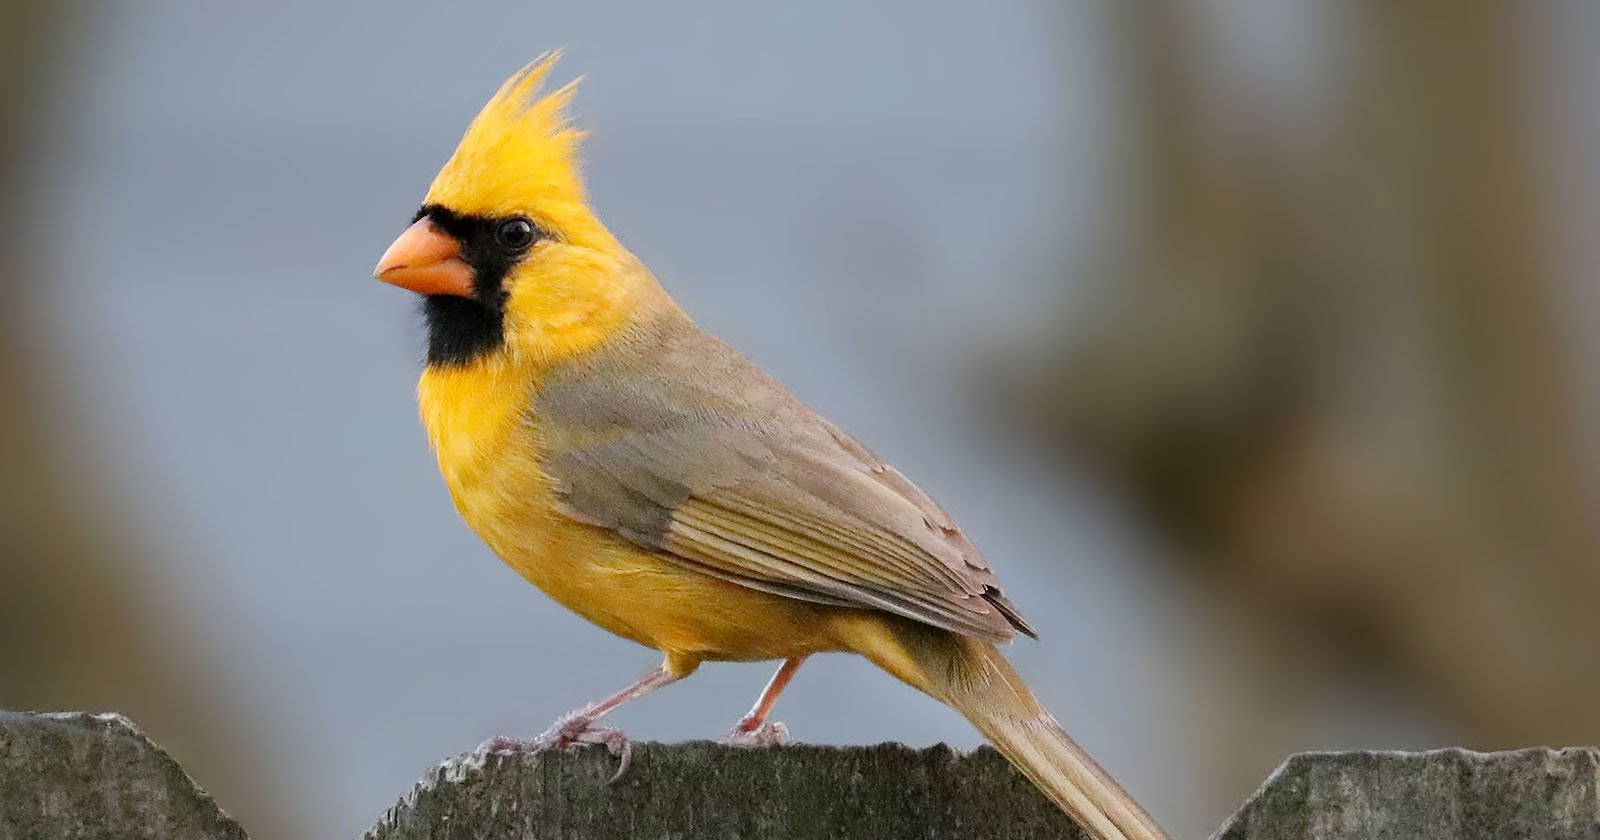 Rare bird: 'Half-male, half-female' cardinal snapped in